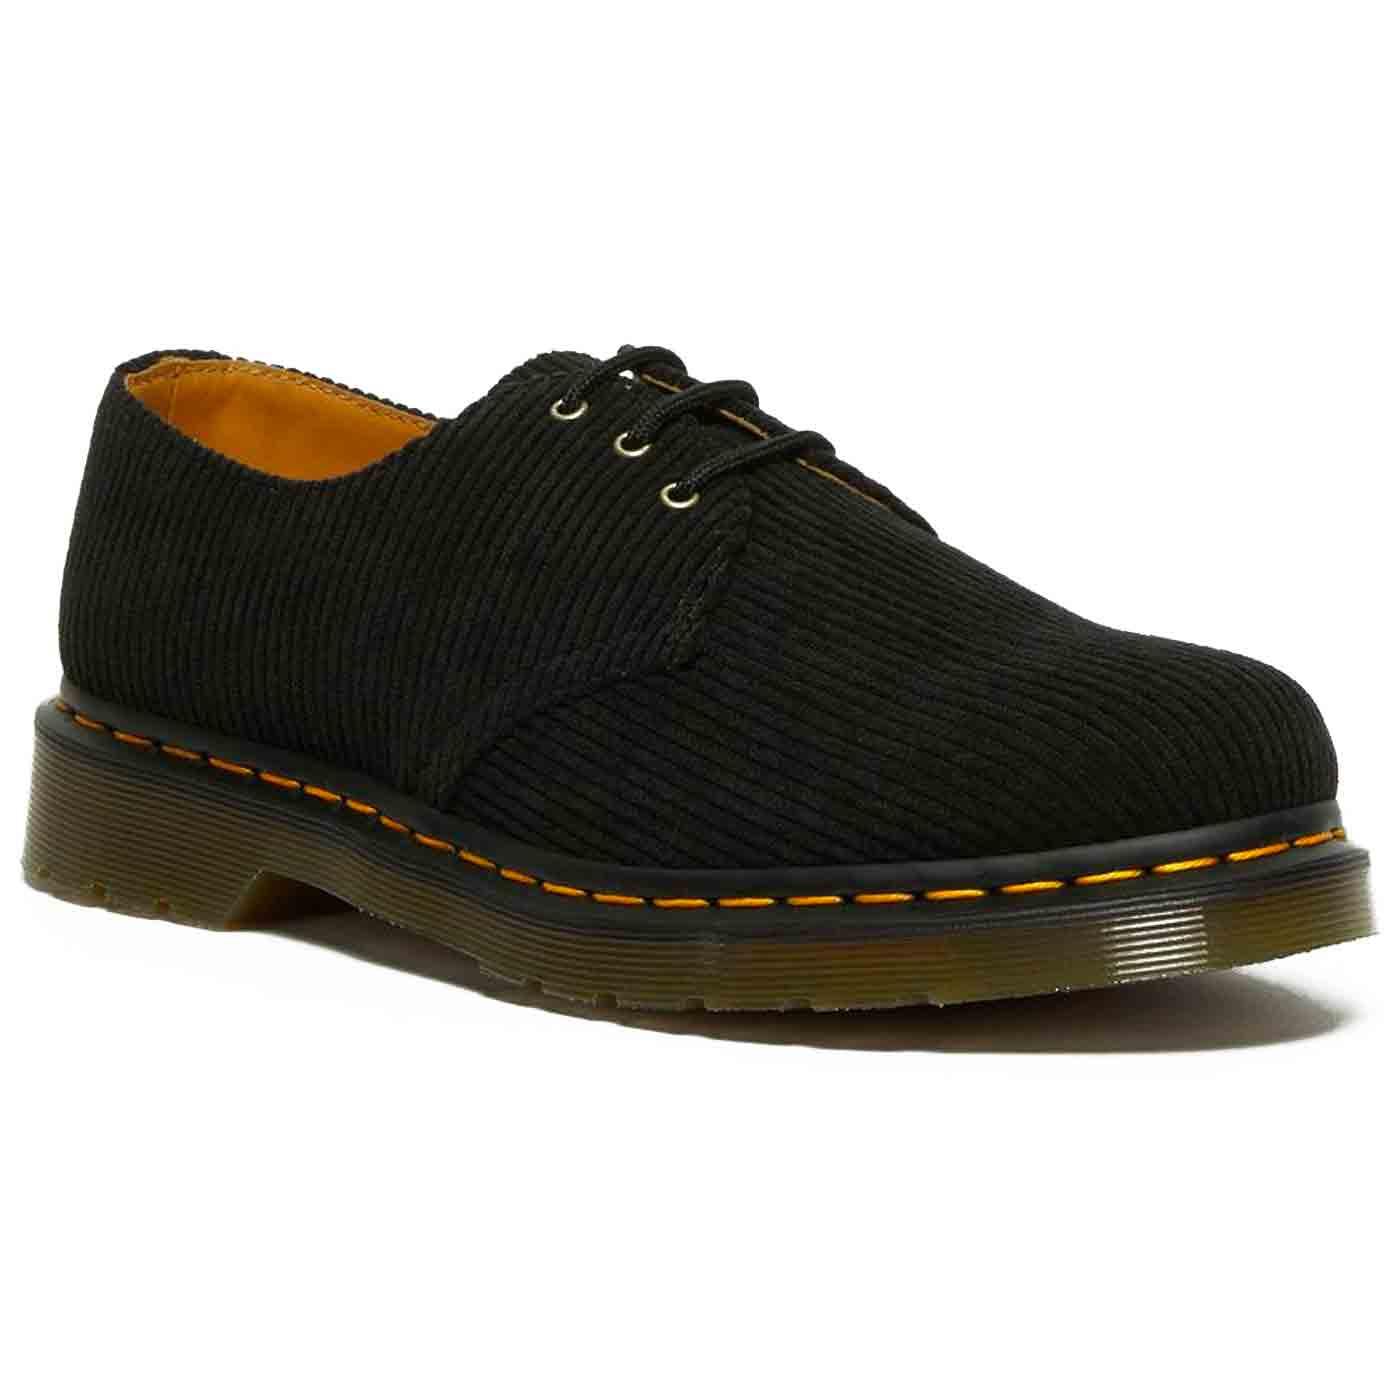 1461 Dr MARTENS Retro Corduroy Oxford Shoes BLACK